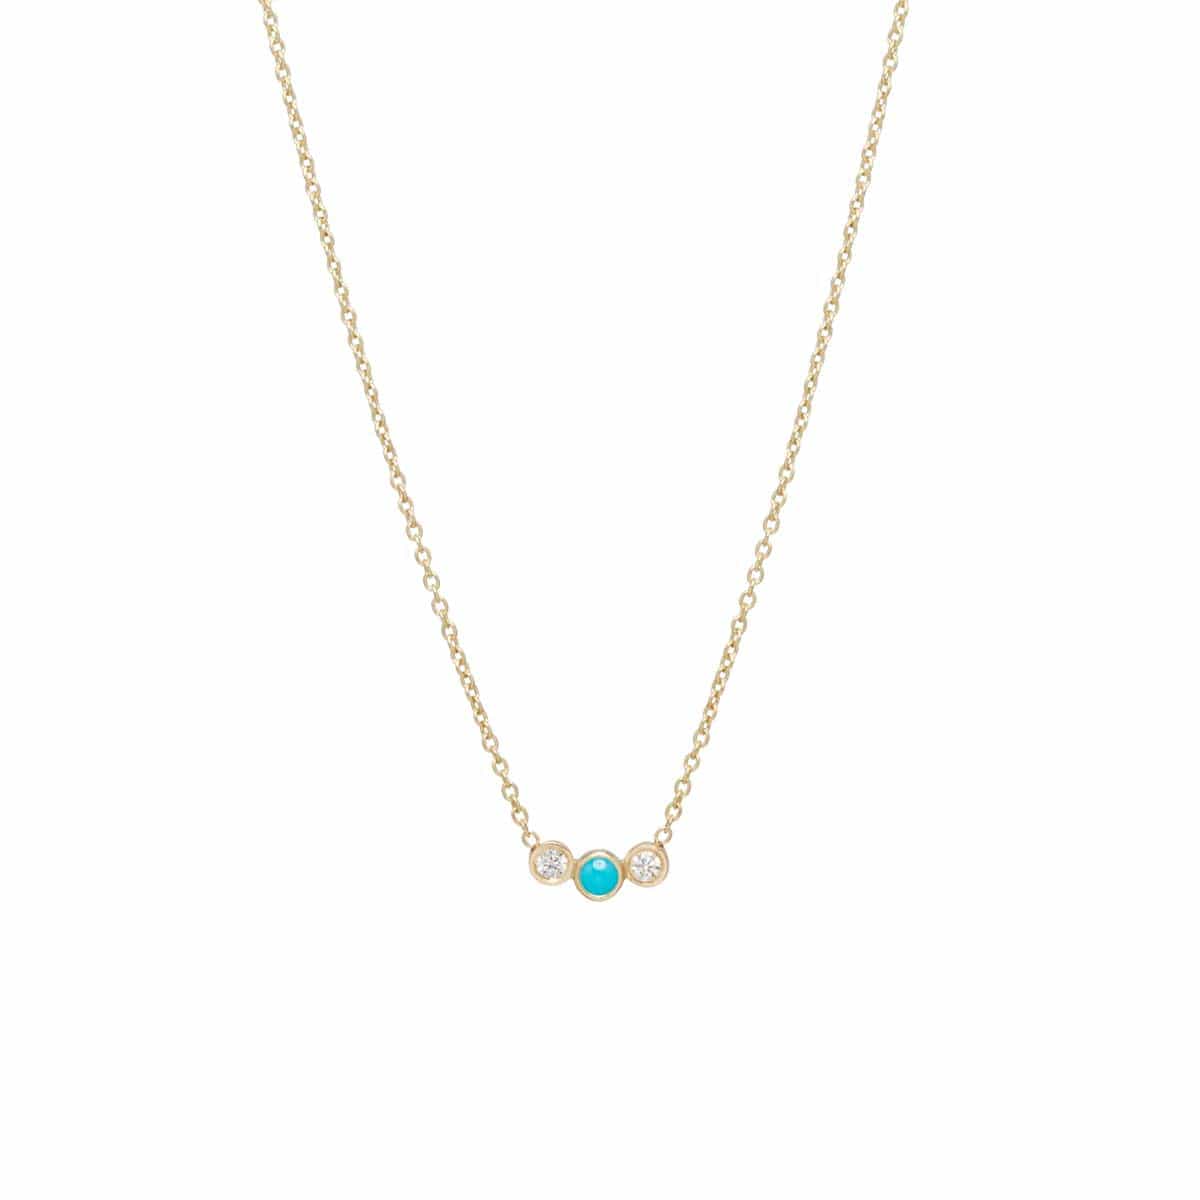 NKL-14K 14k Gold Graduated Turquoise & Diamond Necklace